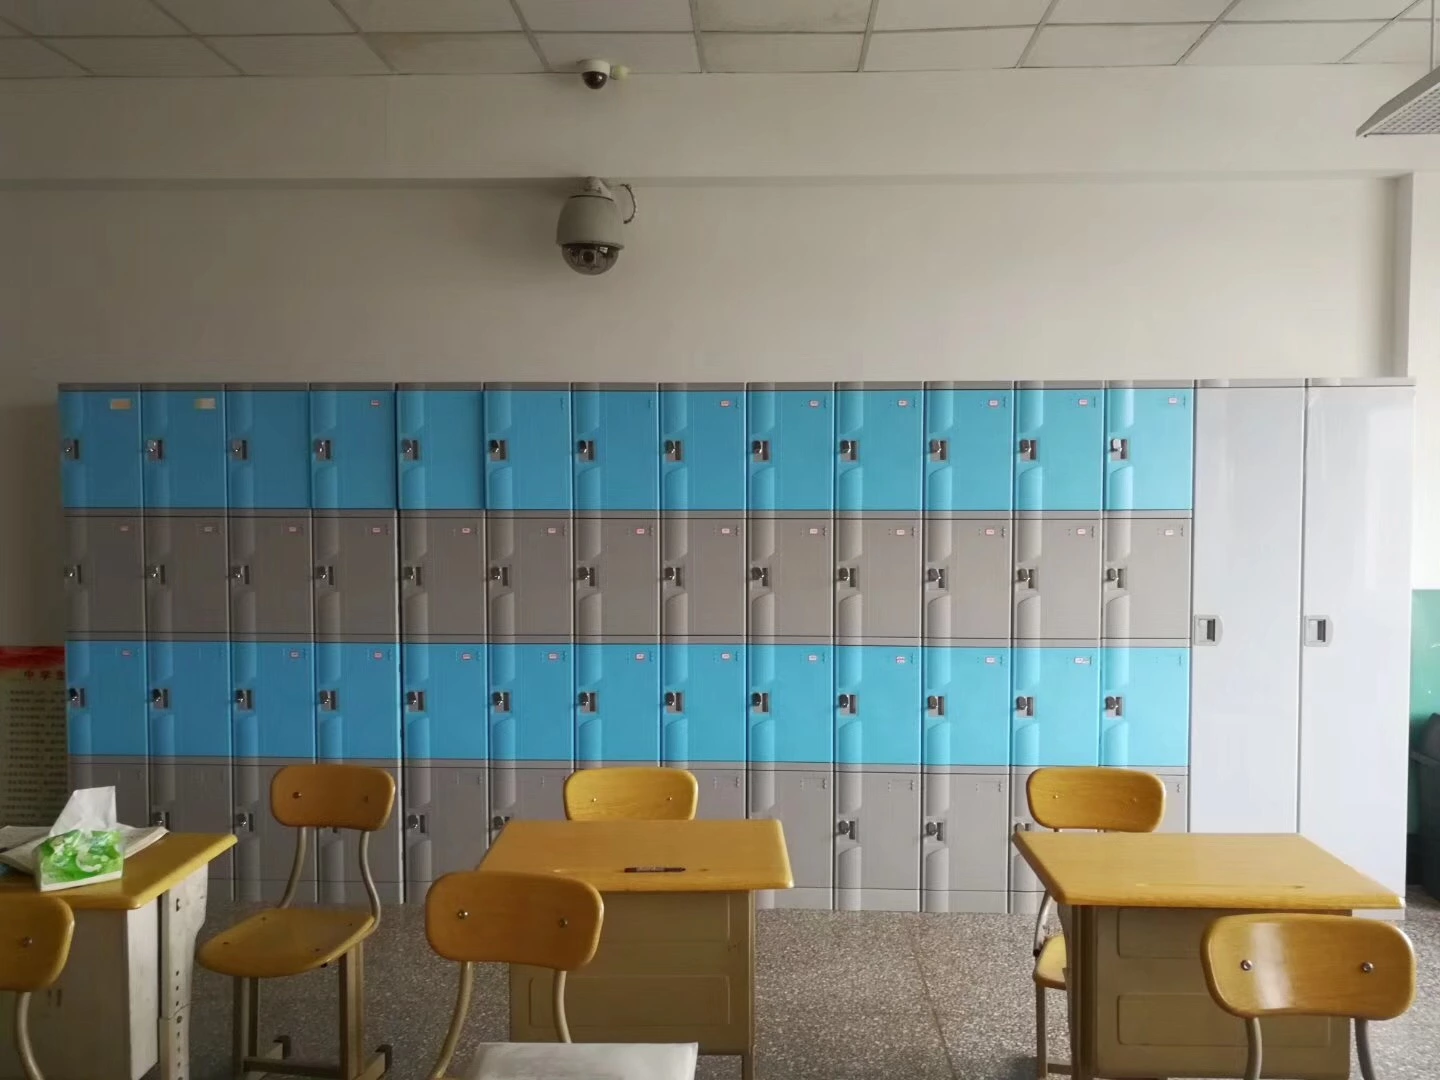 abs-plastic-locker-t-320s-50-four-tiers-plastic-school-lockers-light-blue-and-grey.jpg